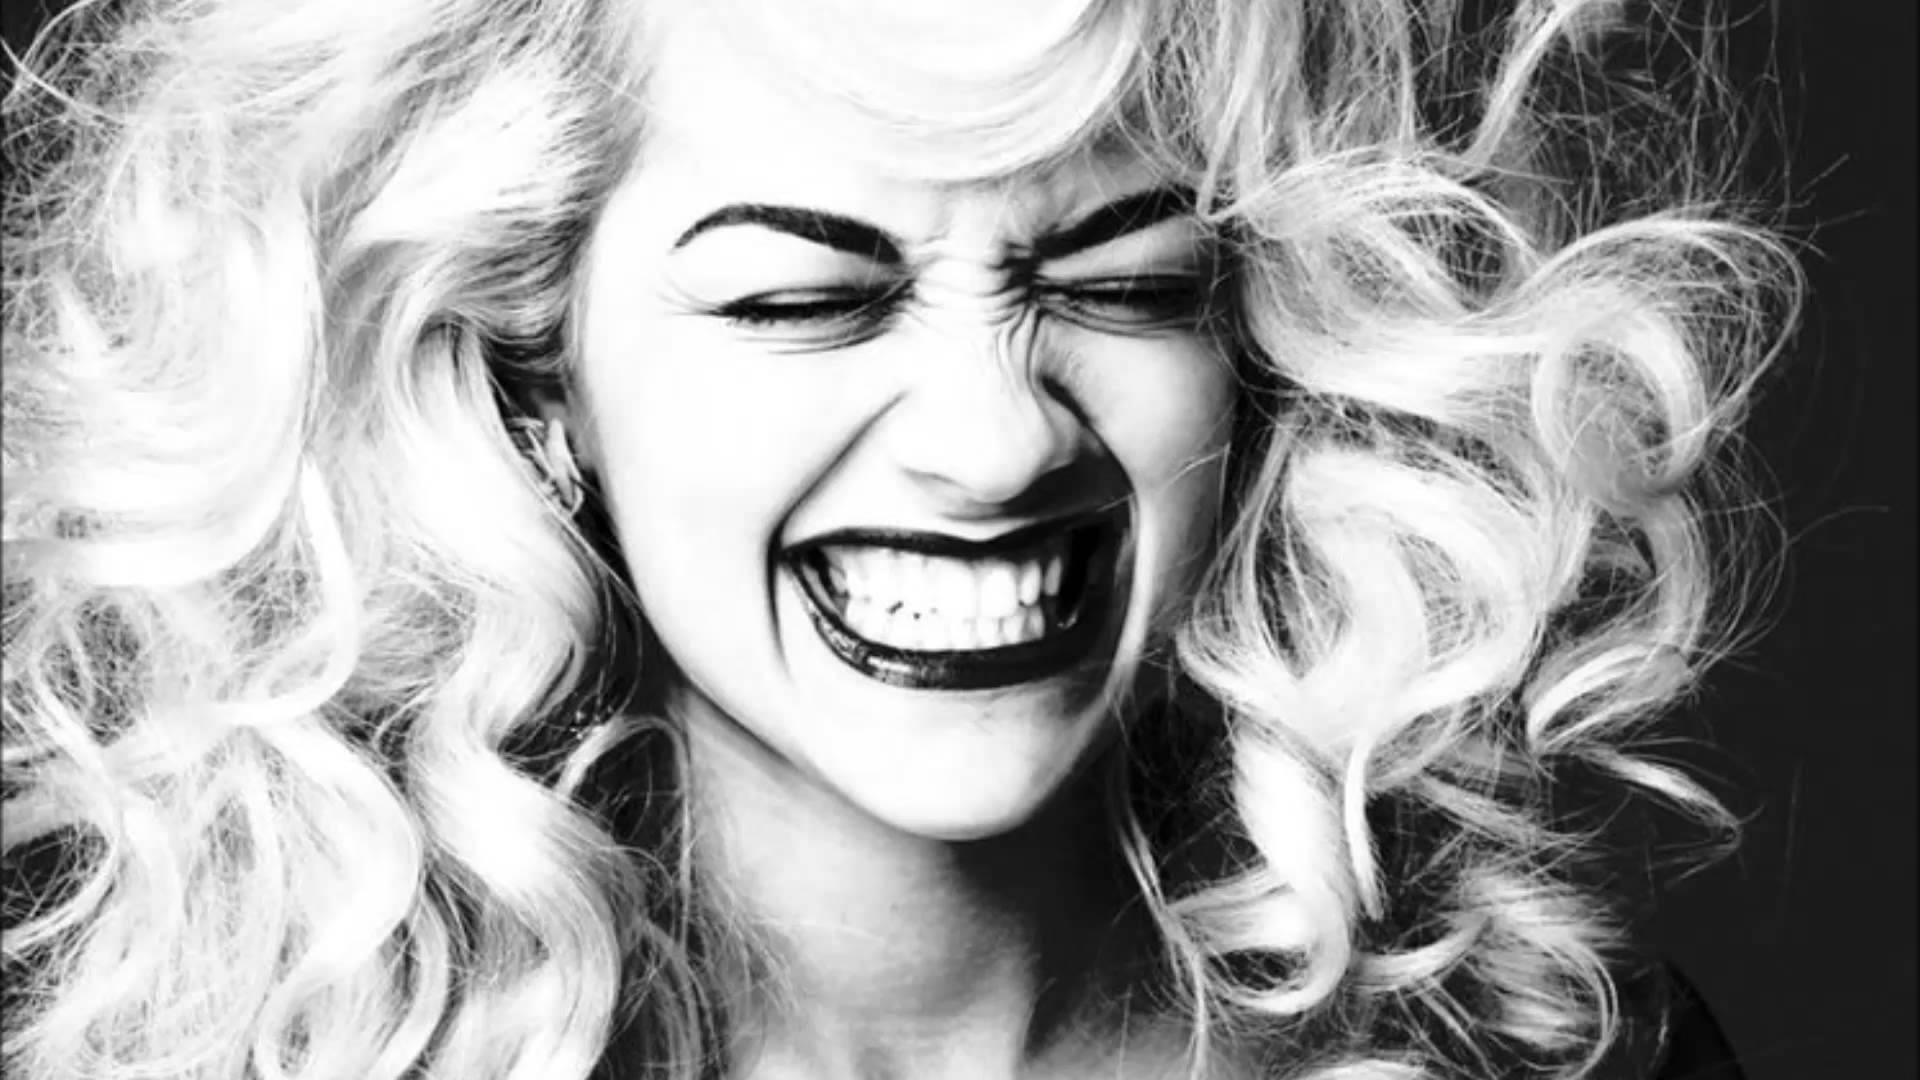 Rita Ora Monochrome 2020 Wallpapers